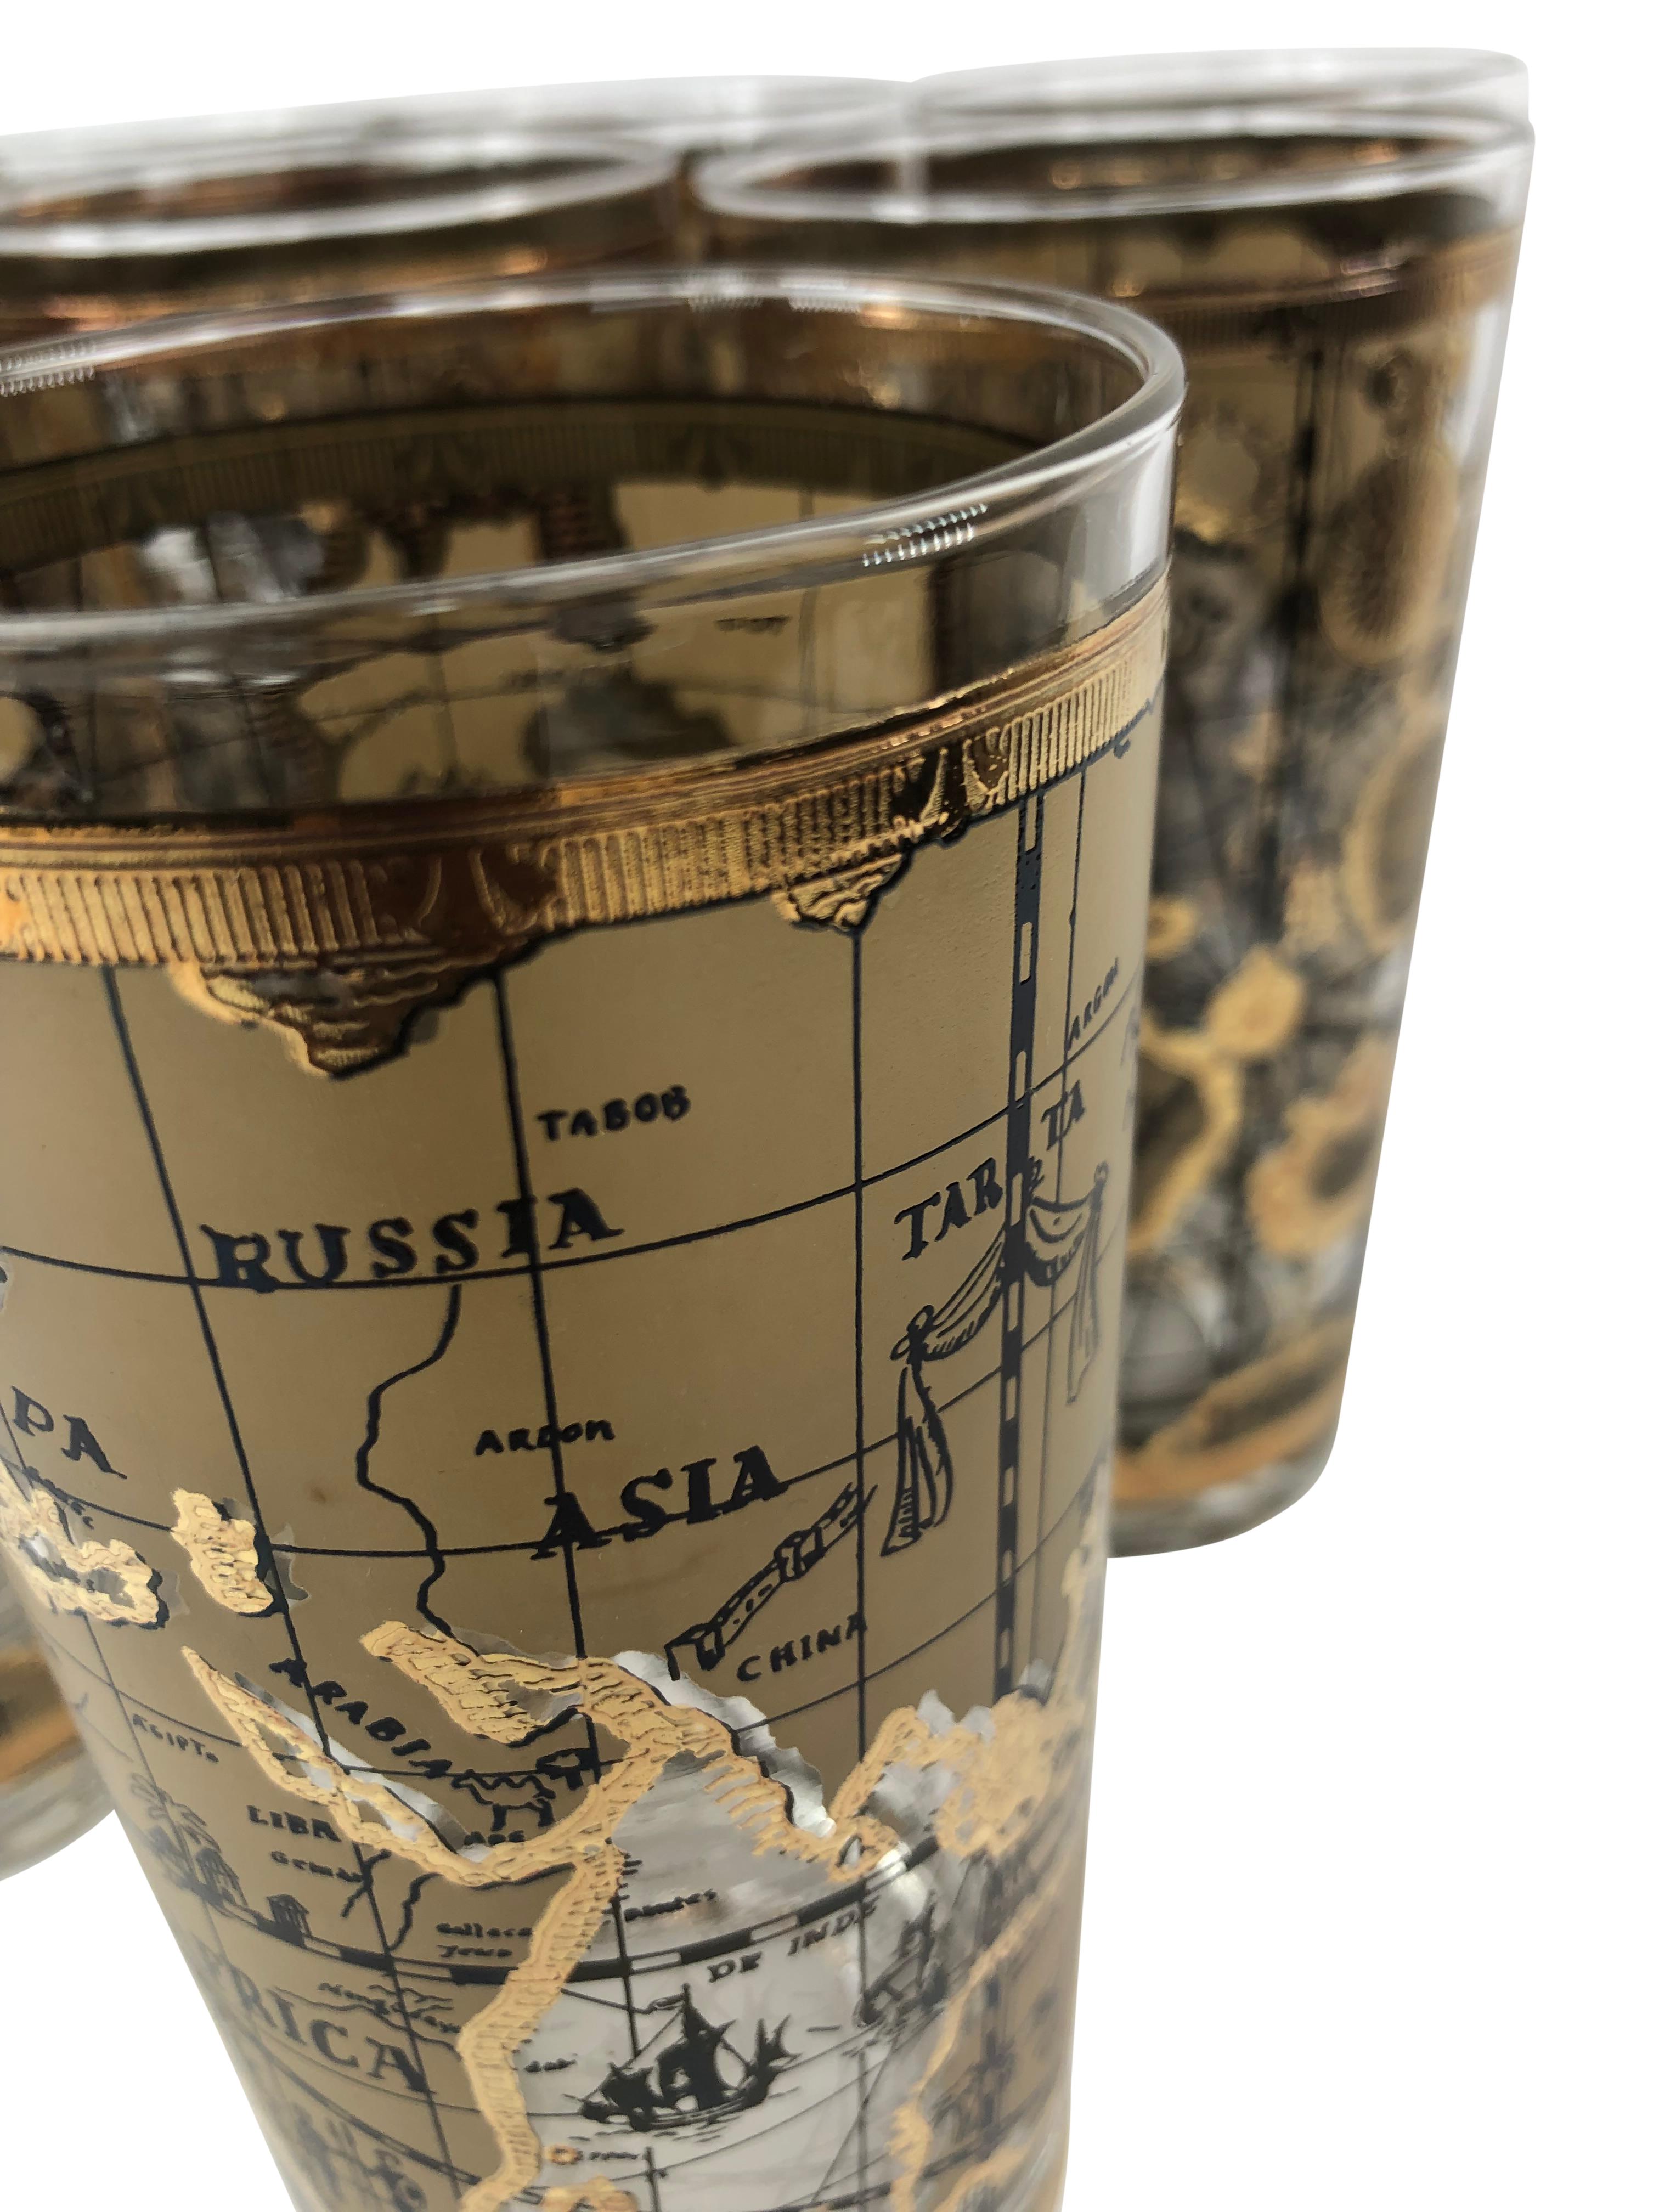 Set de 8 verres Highball en verre Vintage CERA avec cartes du vieux monde. Les verres mesurent 5 1/2